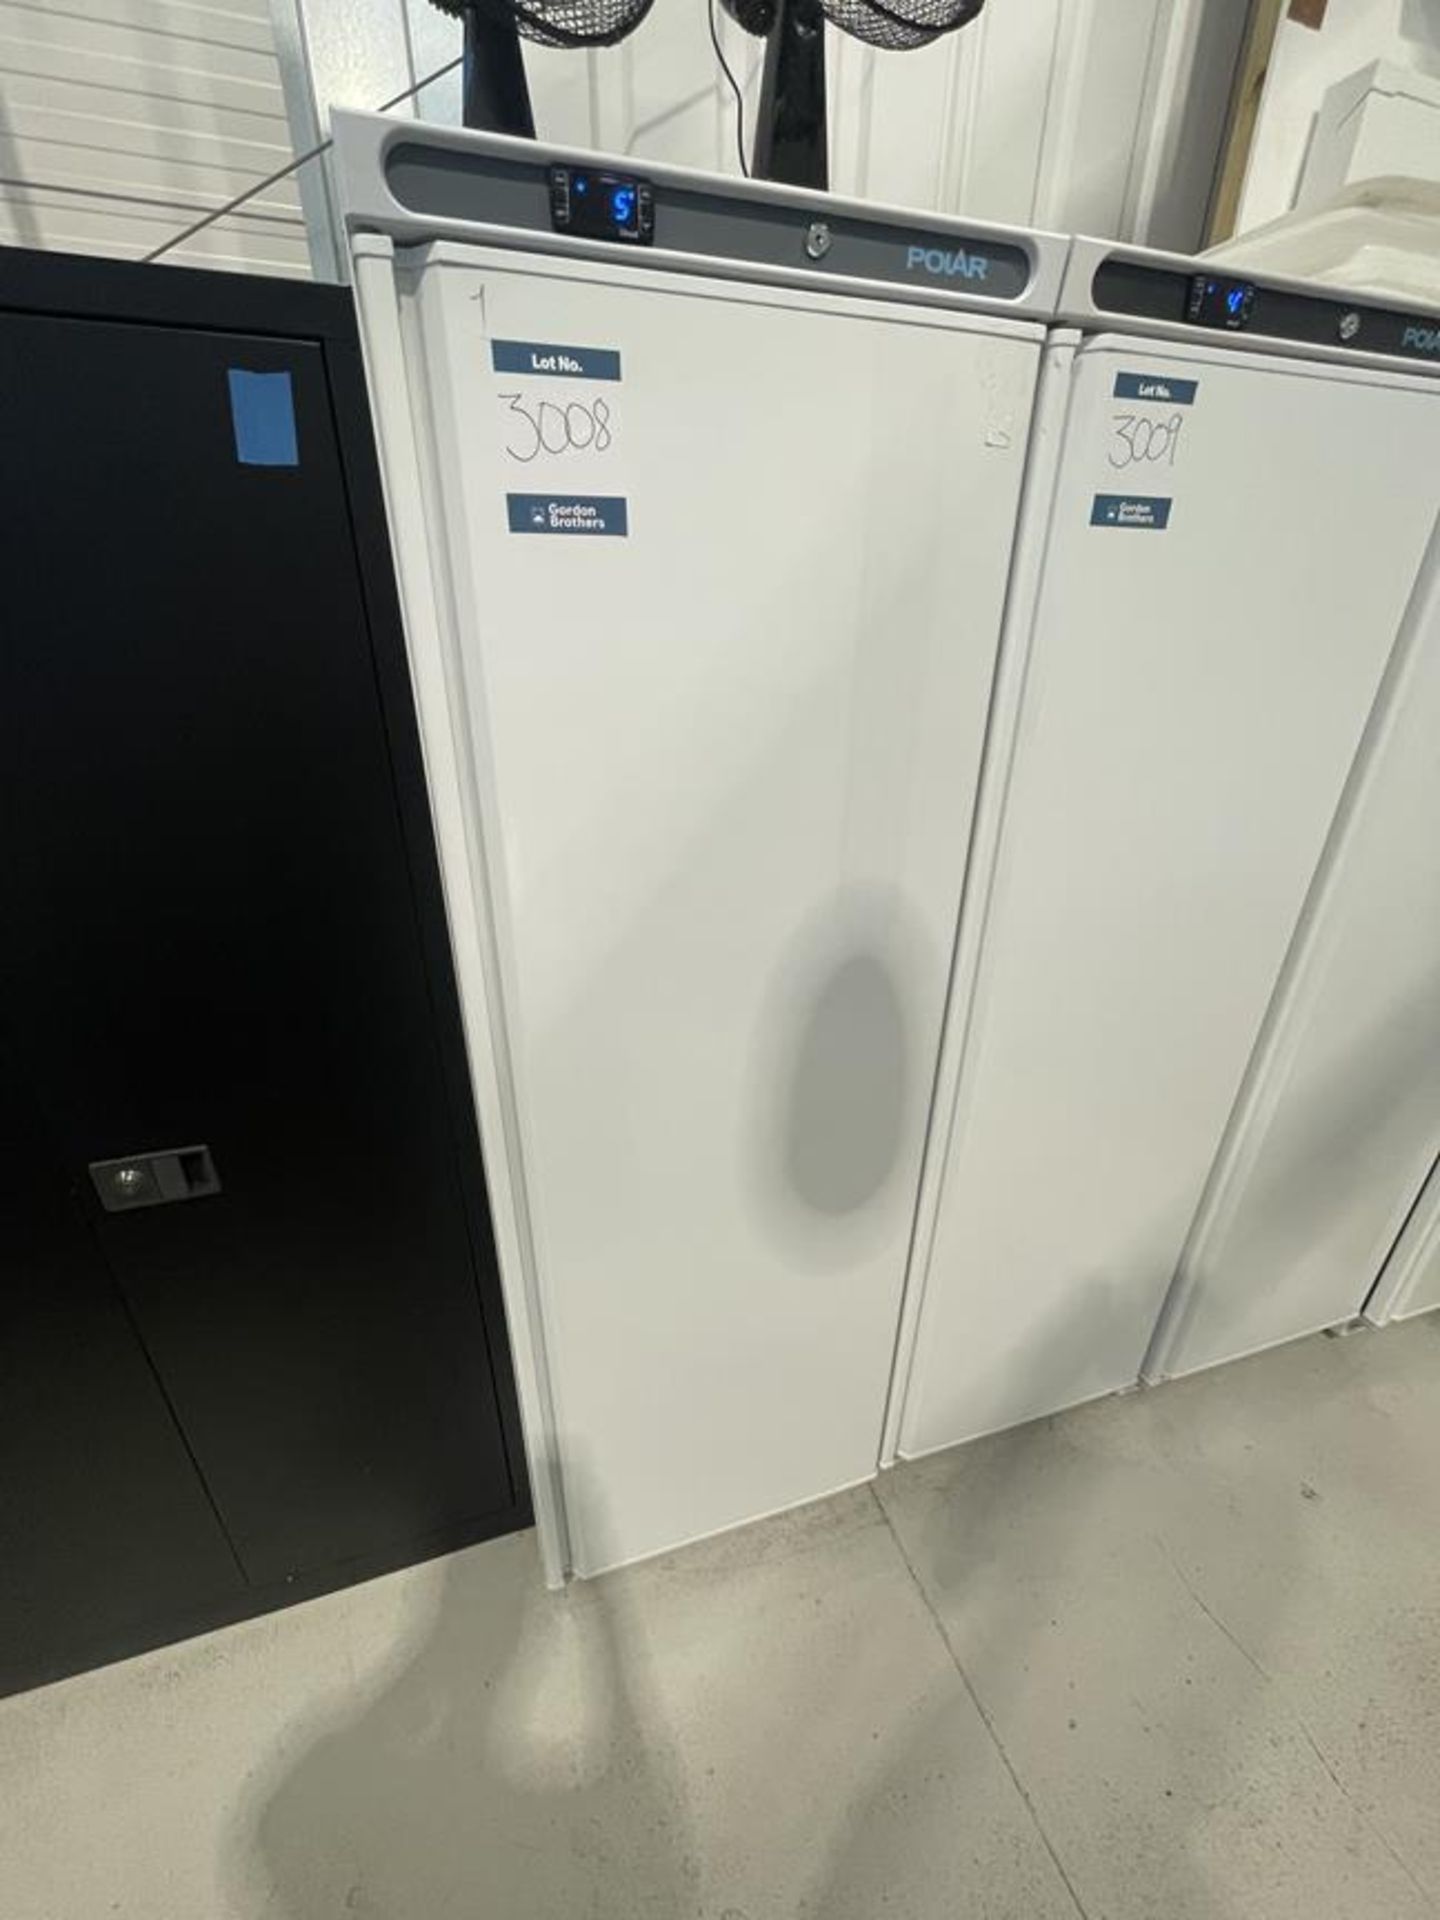 Polar, CD612 upright commercial refrigerator, Serial No. CD61221112878